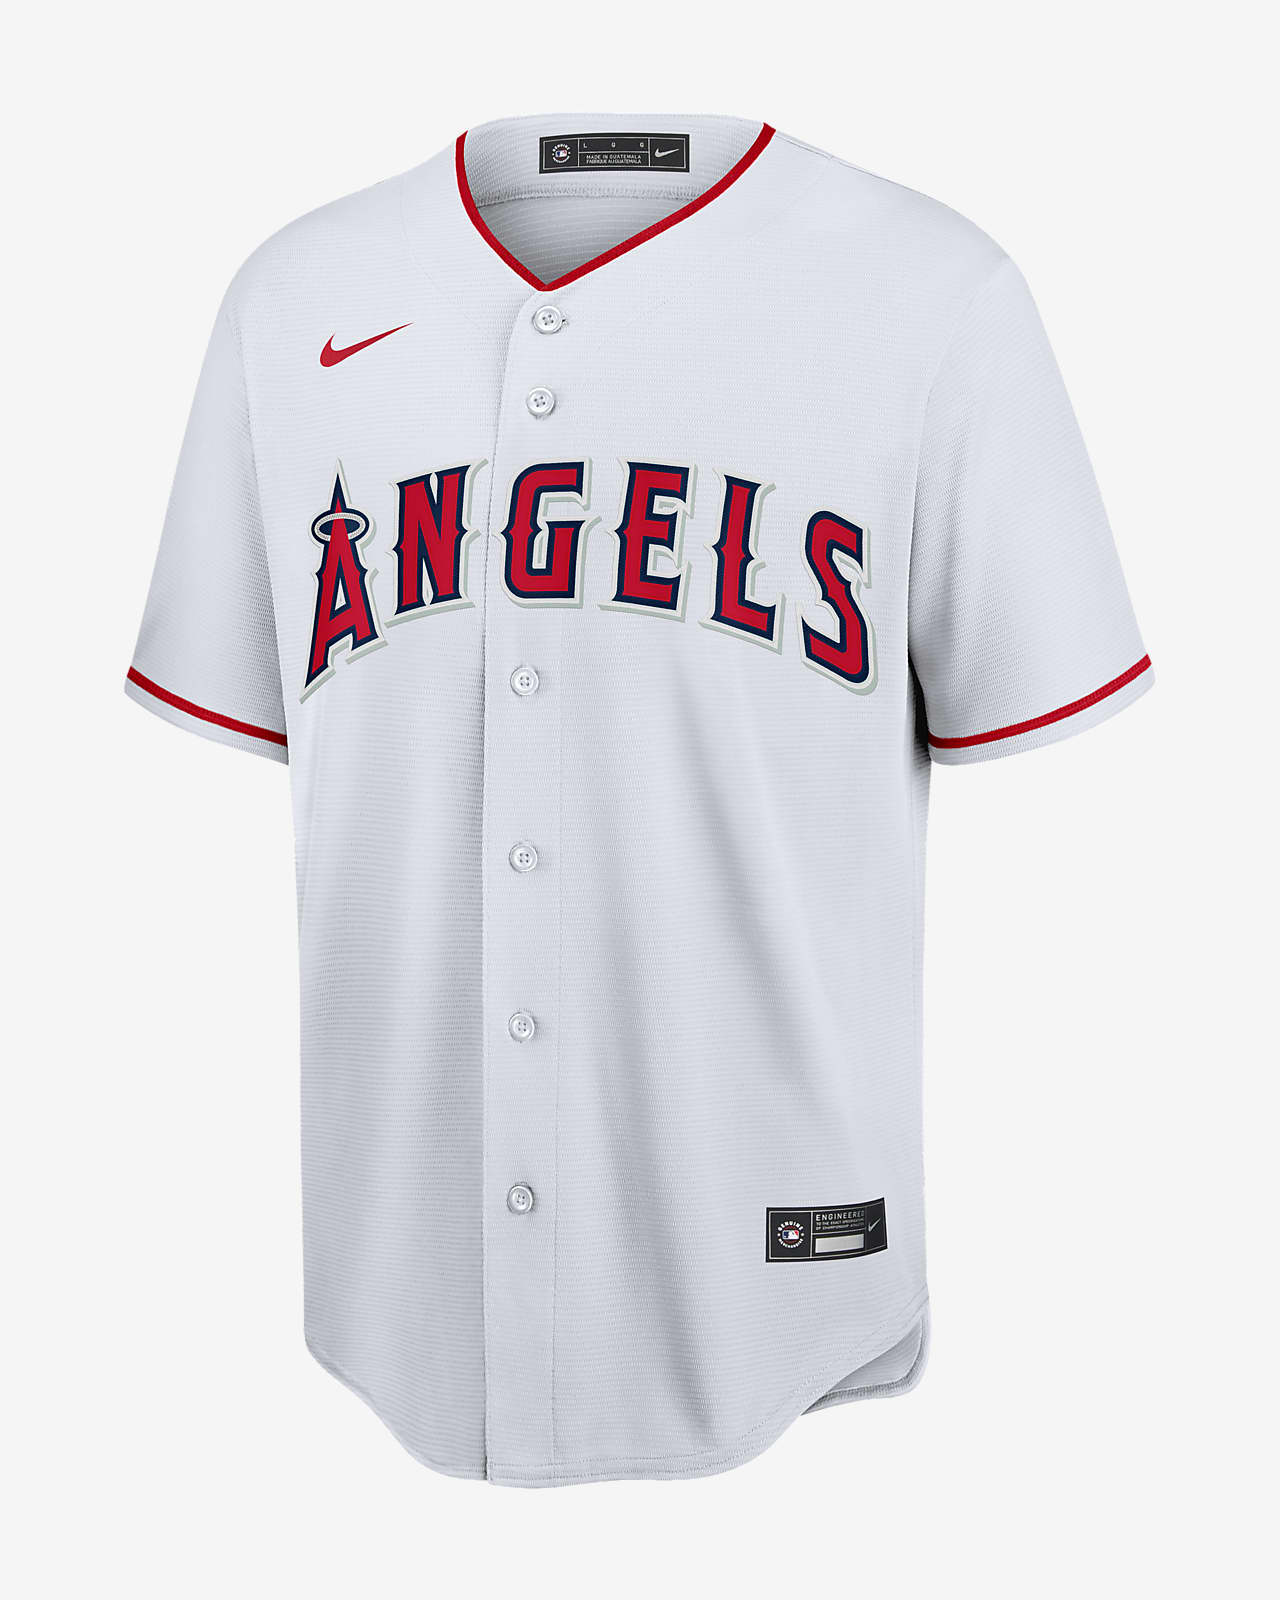 los angeles angels baseball jersey